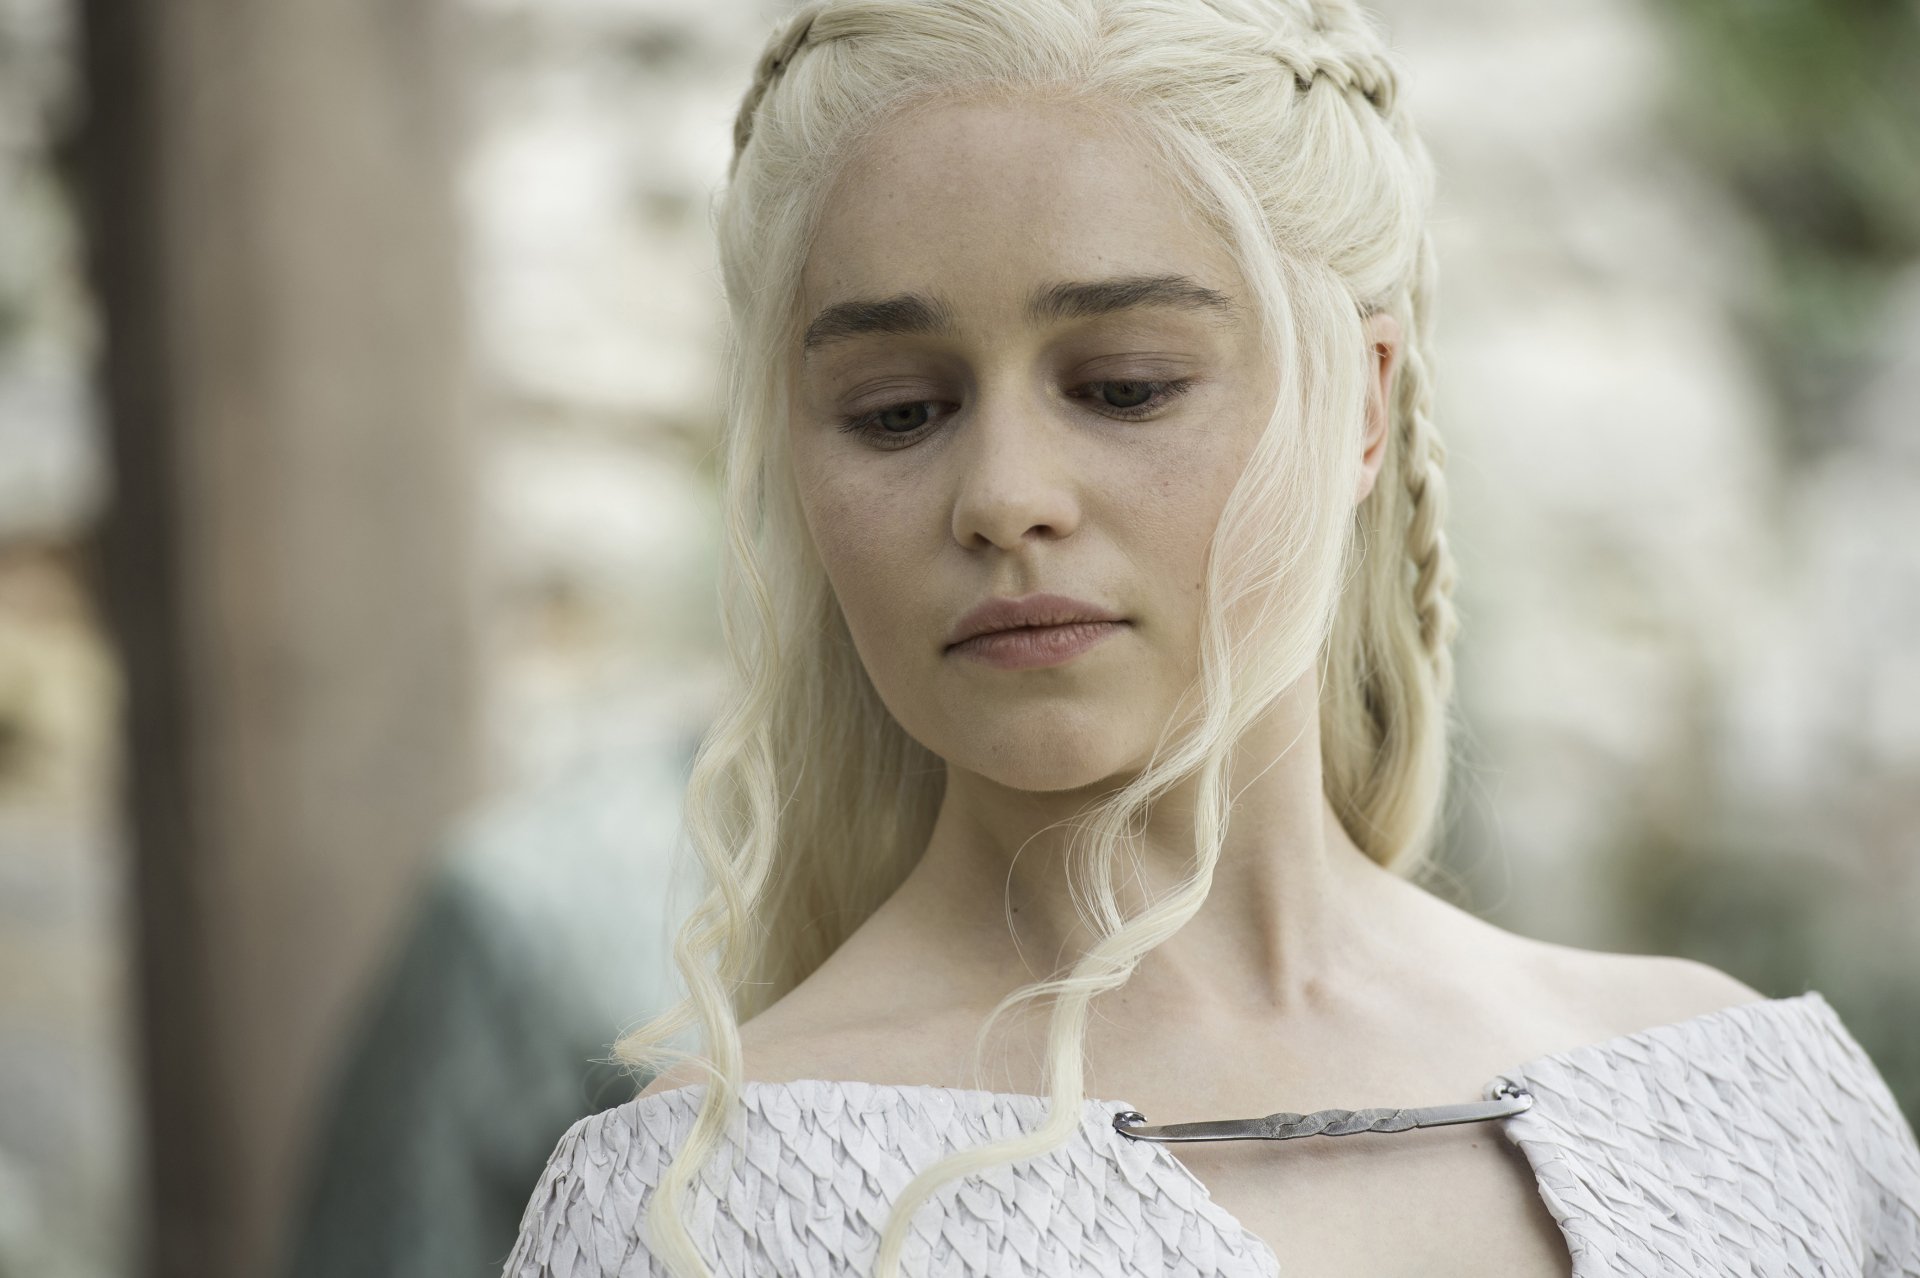 Download Face Actress British Emilia Clarke Daenerys Targaryen TV Show Game Of Thrones  4k Ultra HD Wallpaper